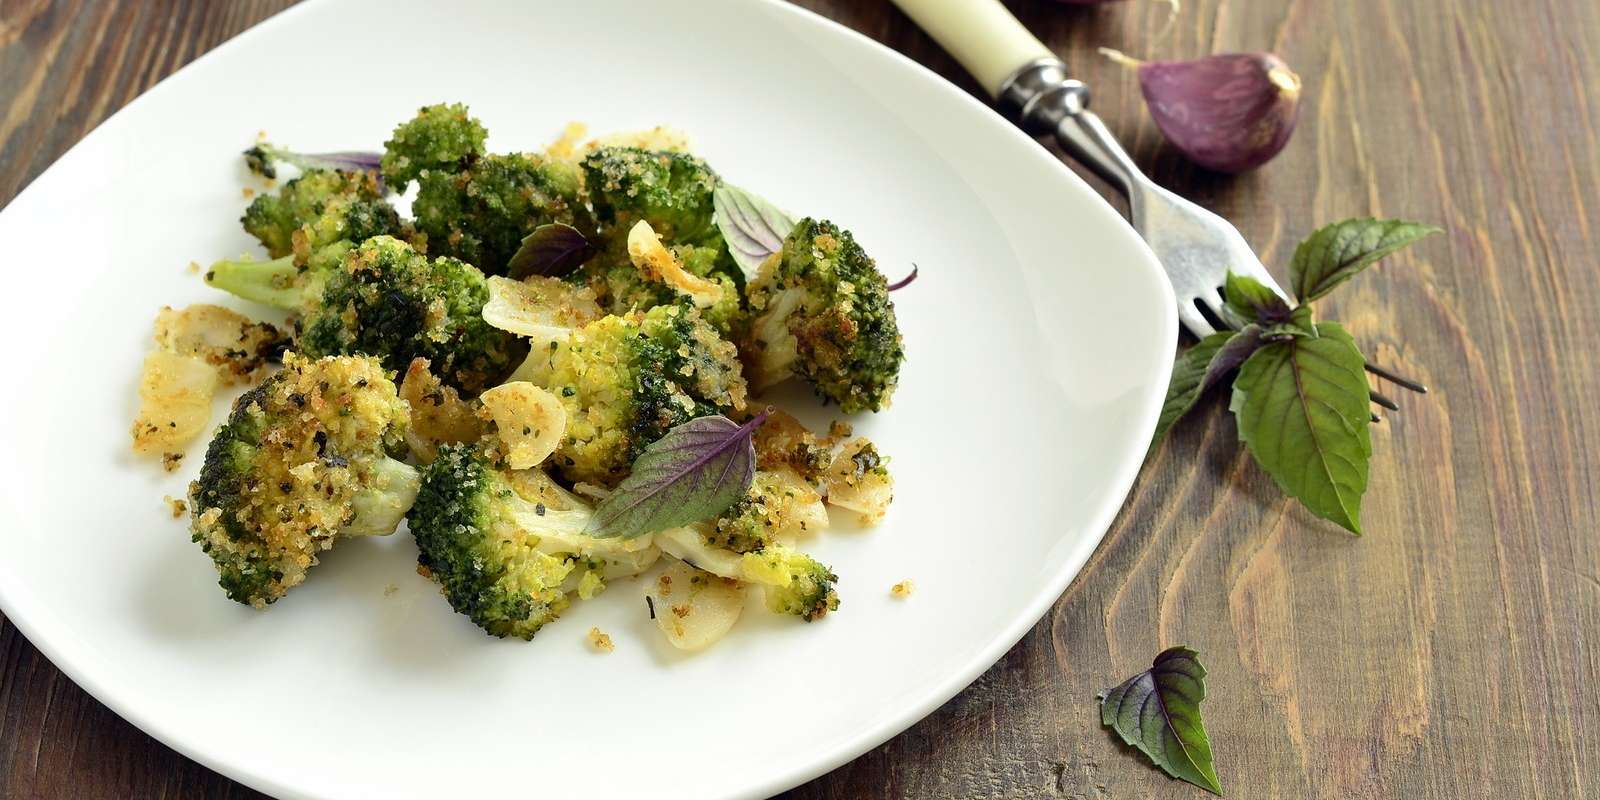 Roasted Broccoli with Dijon & Parsley Bread Crumbs